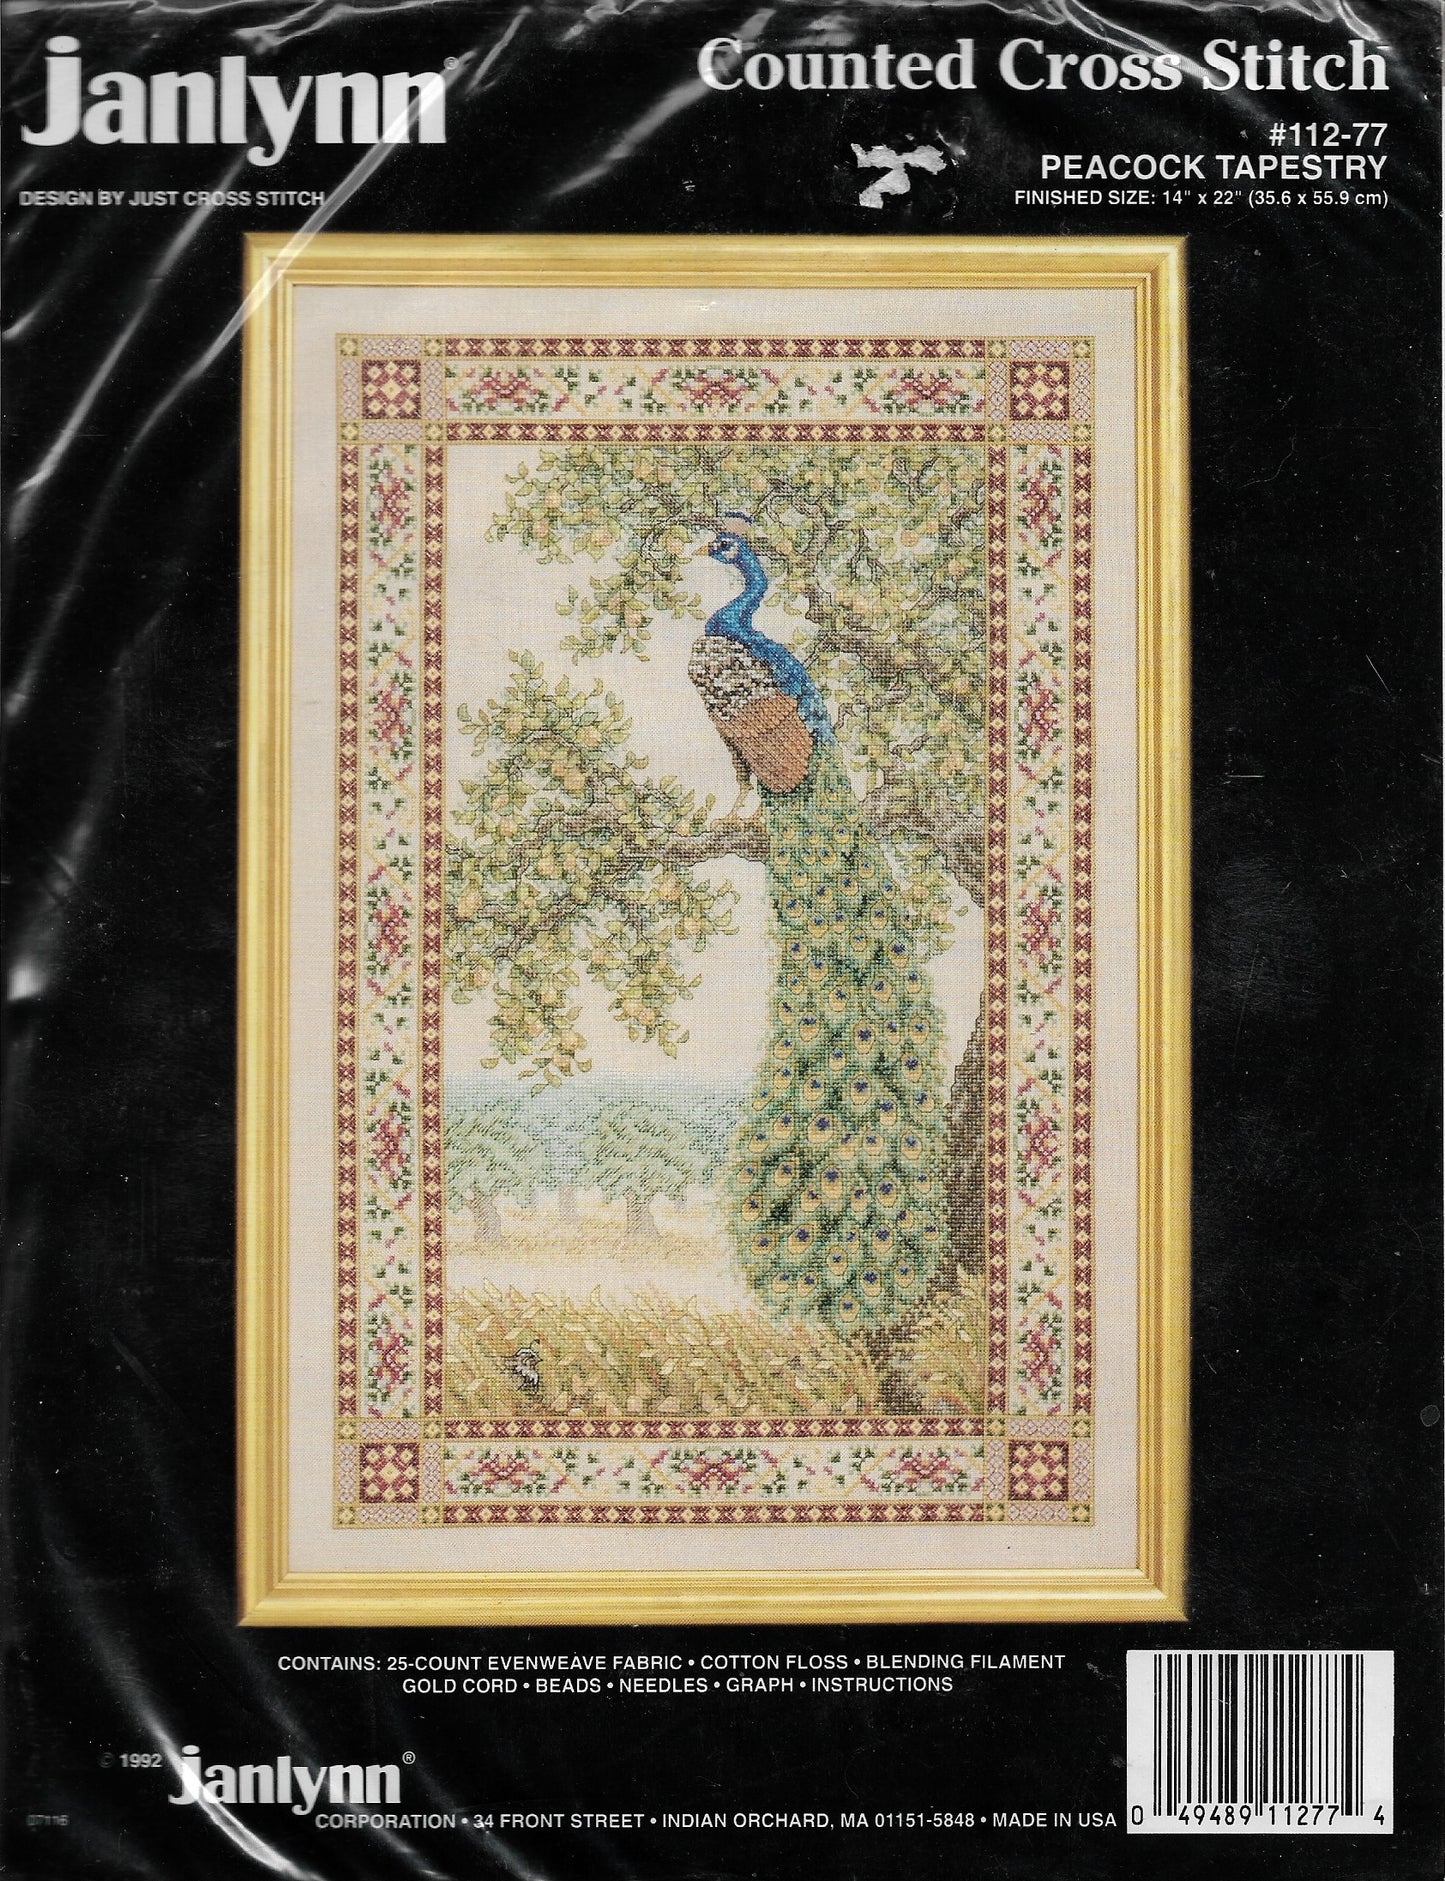 JanLynn Peacock Tapestry 112-77 cross stitch kit